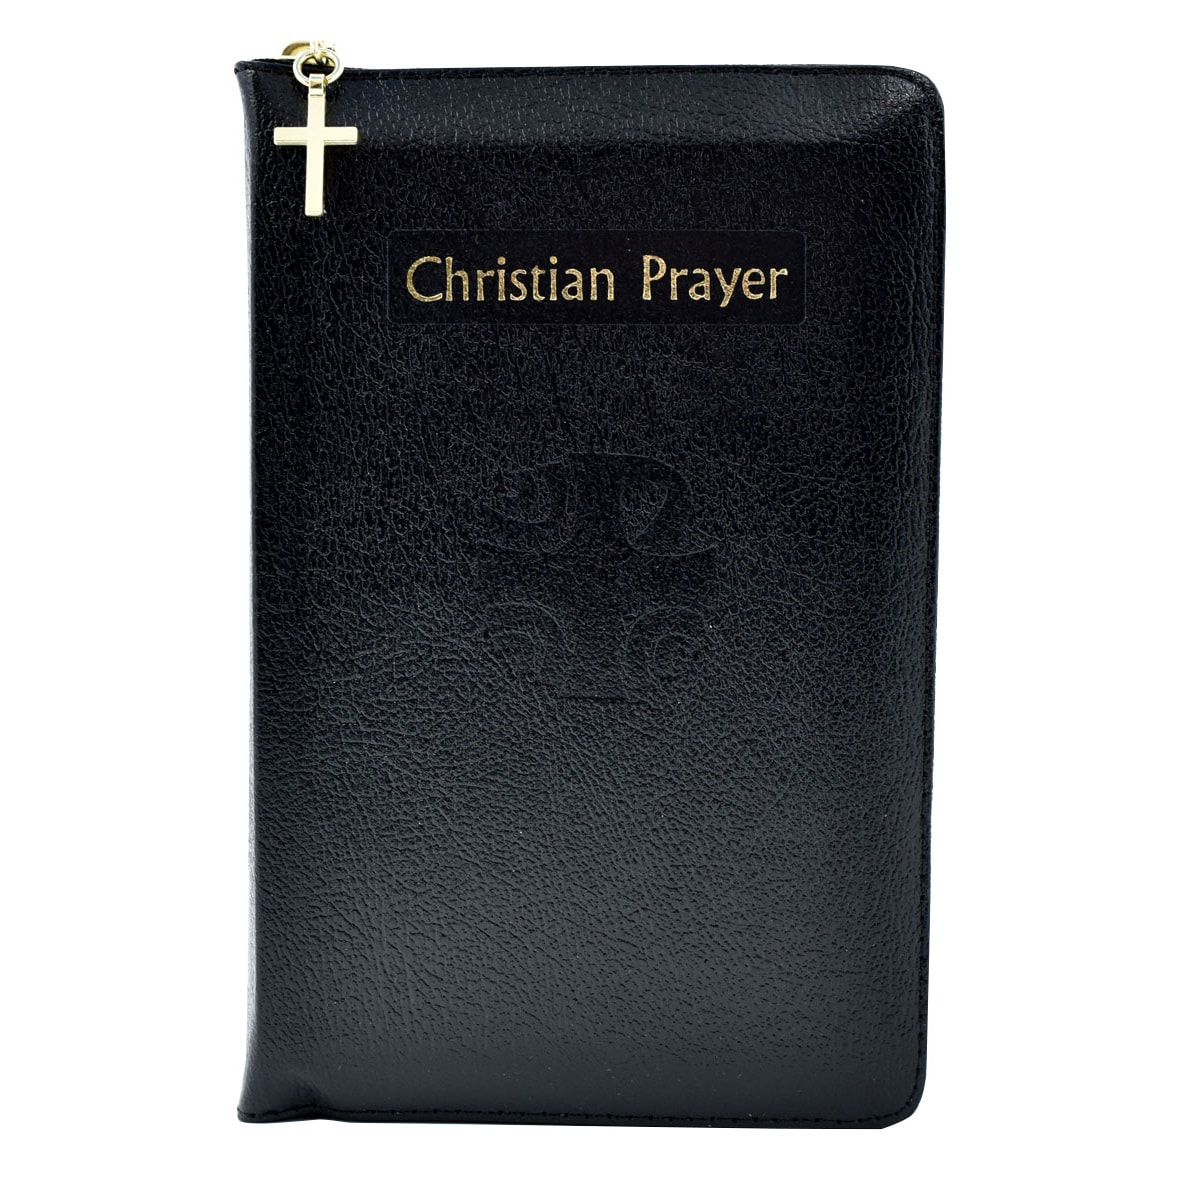 Catholic Book Christian Prayer Leather Edition W Zipper